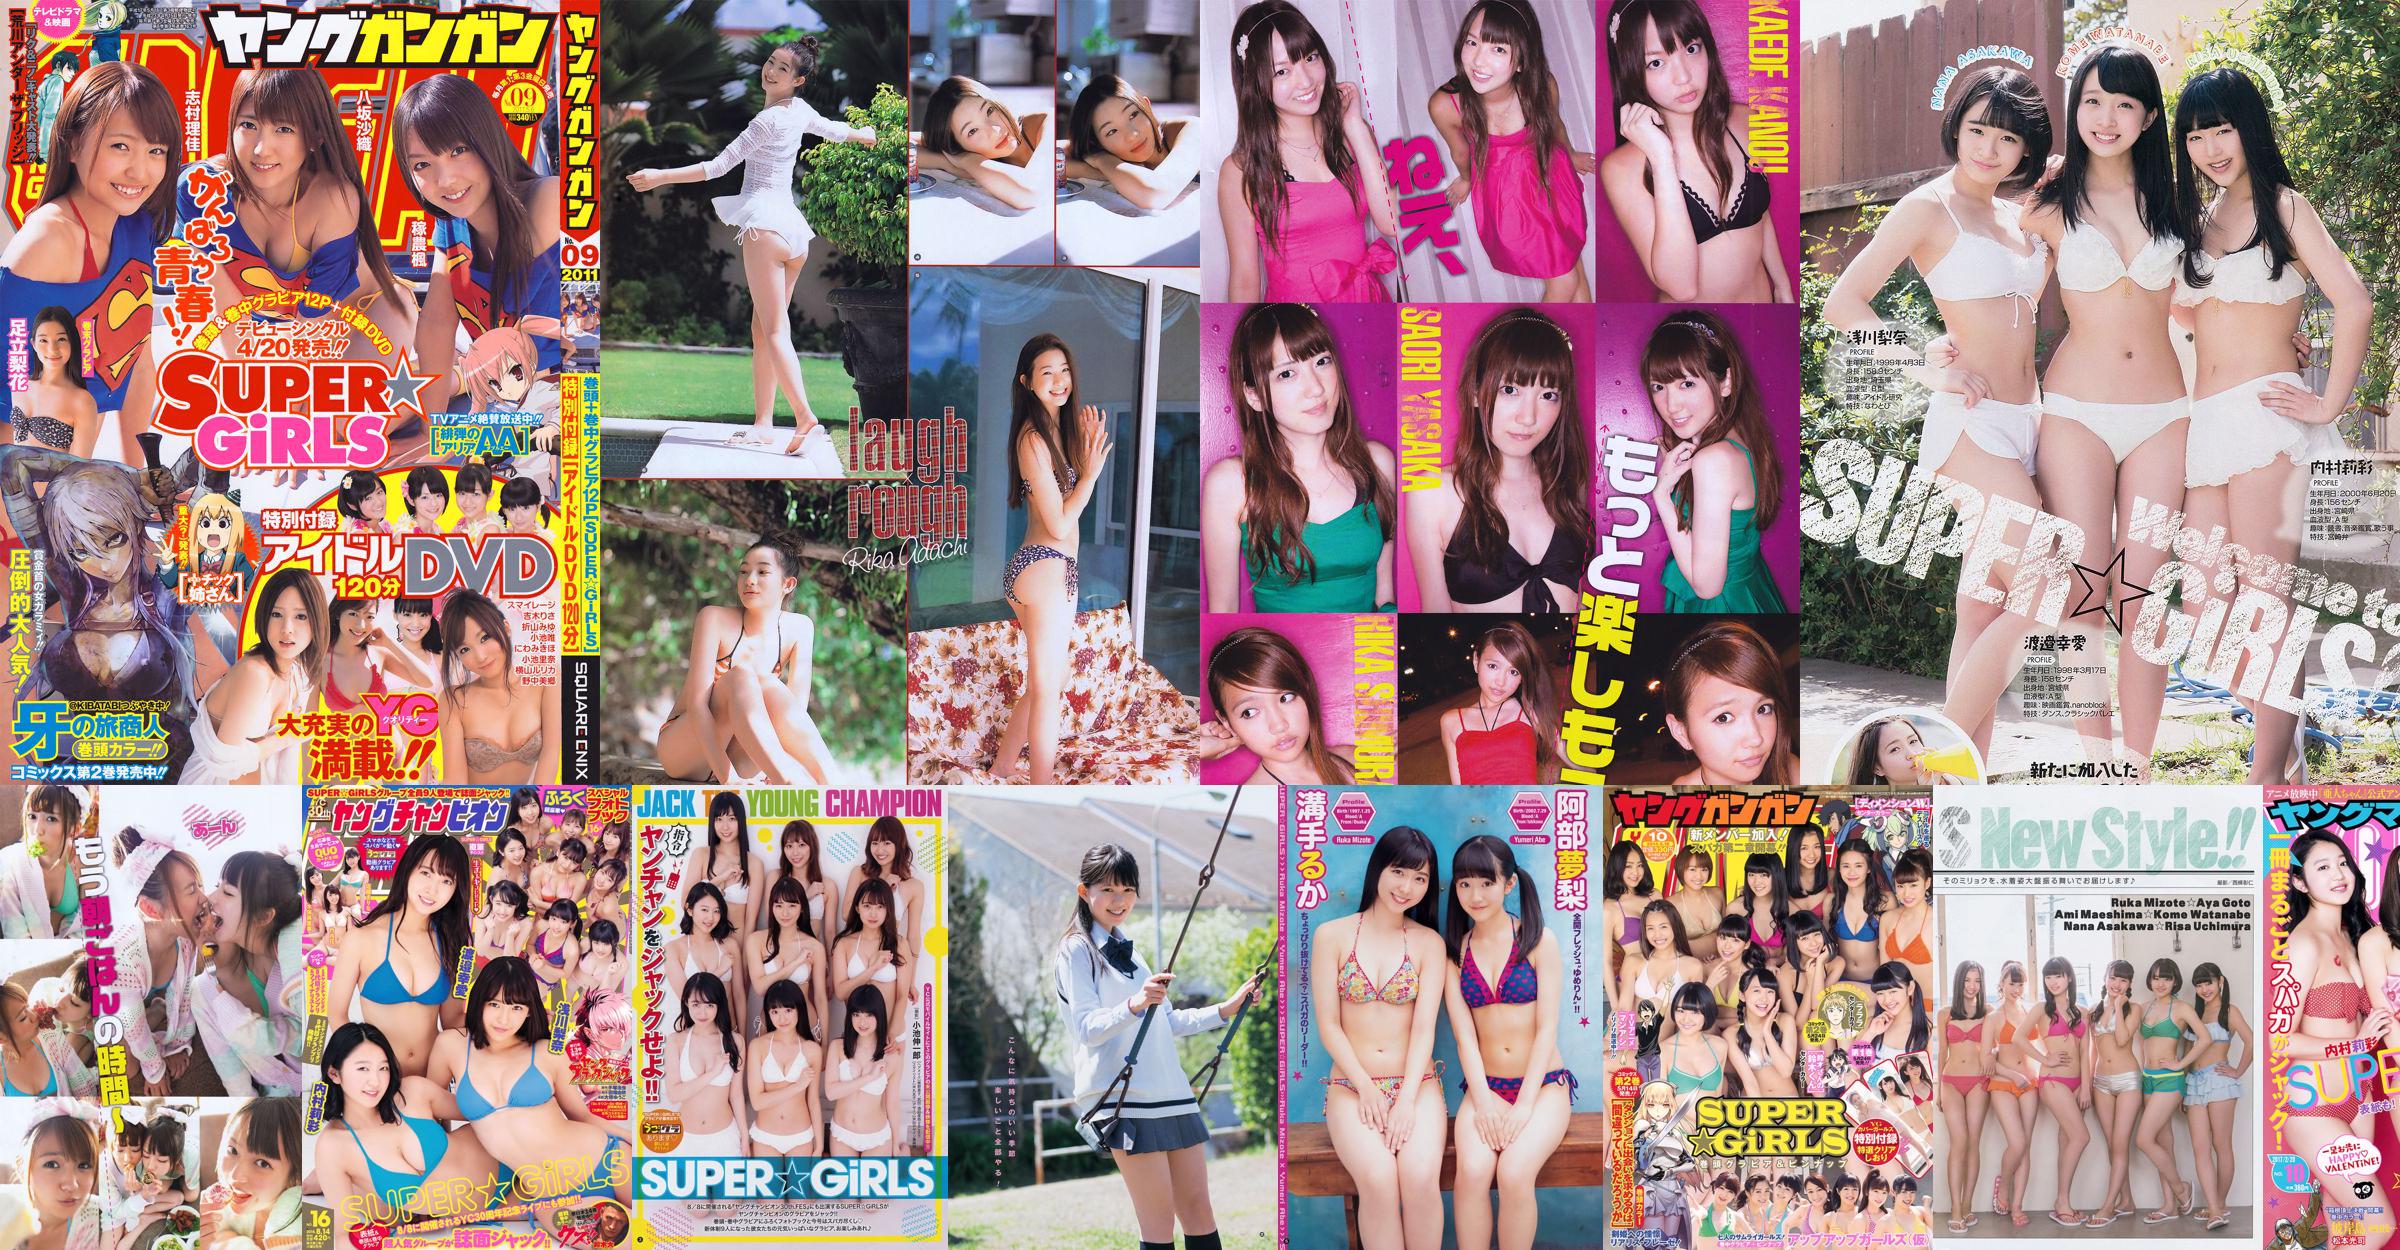 [Young Gangan] SUPER ☆ GiRLS Momose Misaki 2011 No.14 Photo Magazine No.6b98a9 Pagina 1